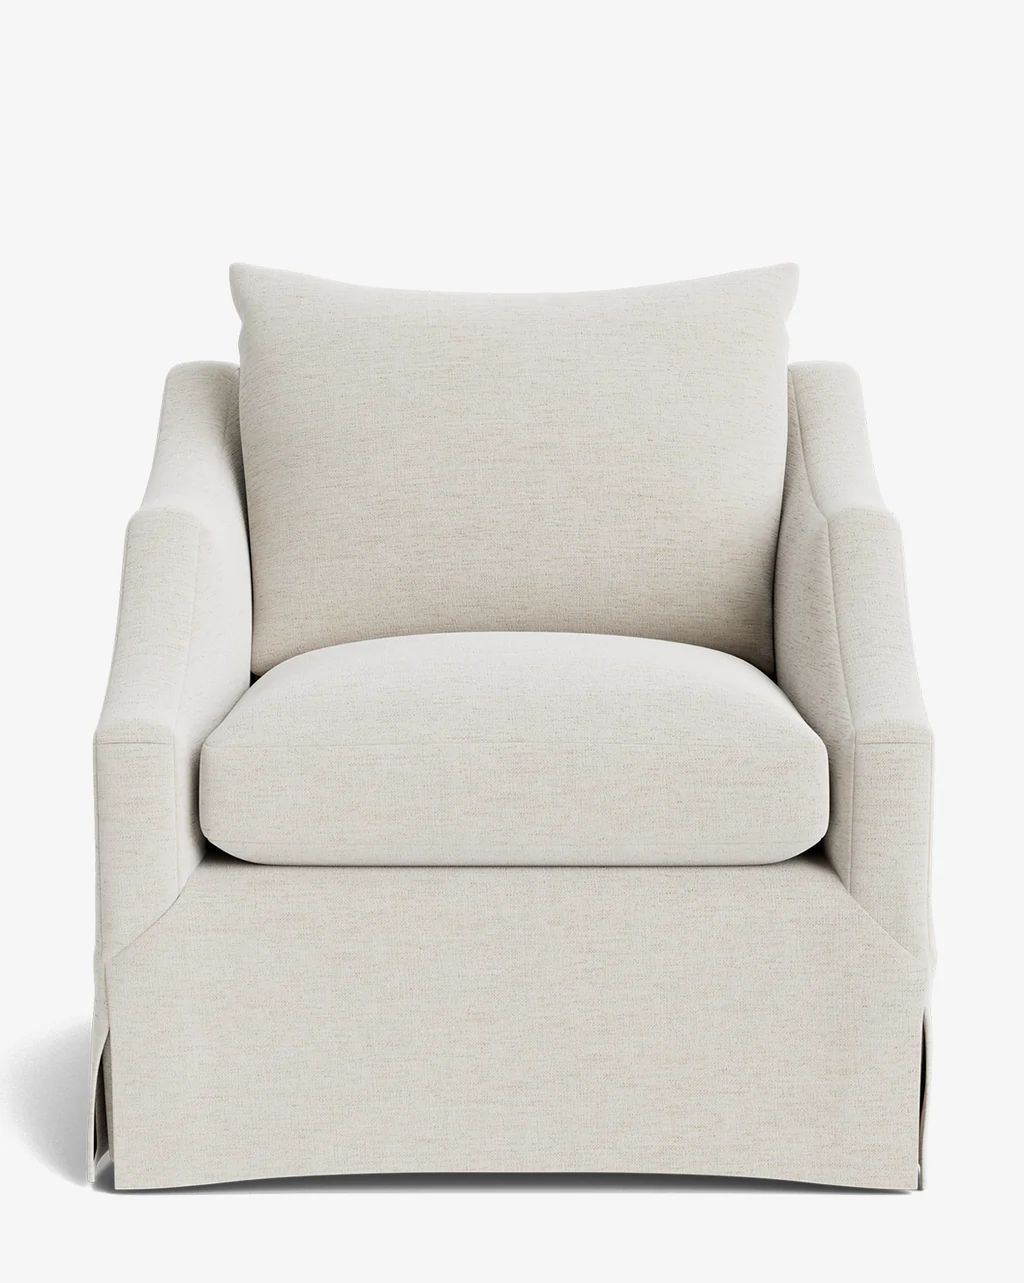 Everleigh Slipcover Lounge Chair | McGee & Co.